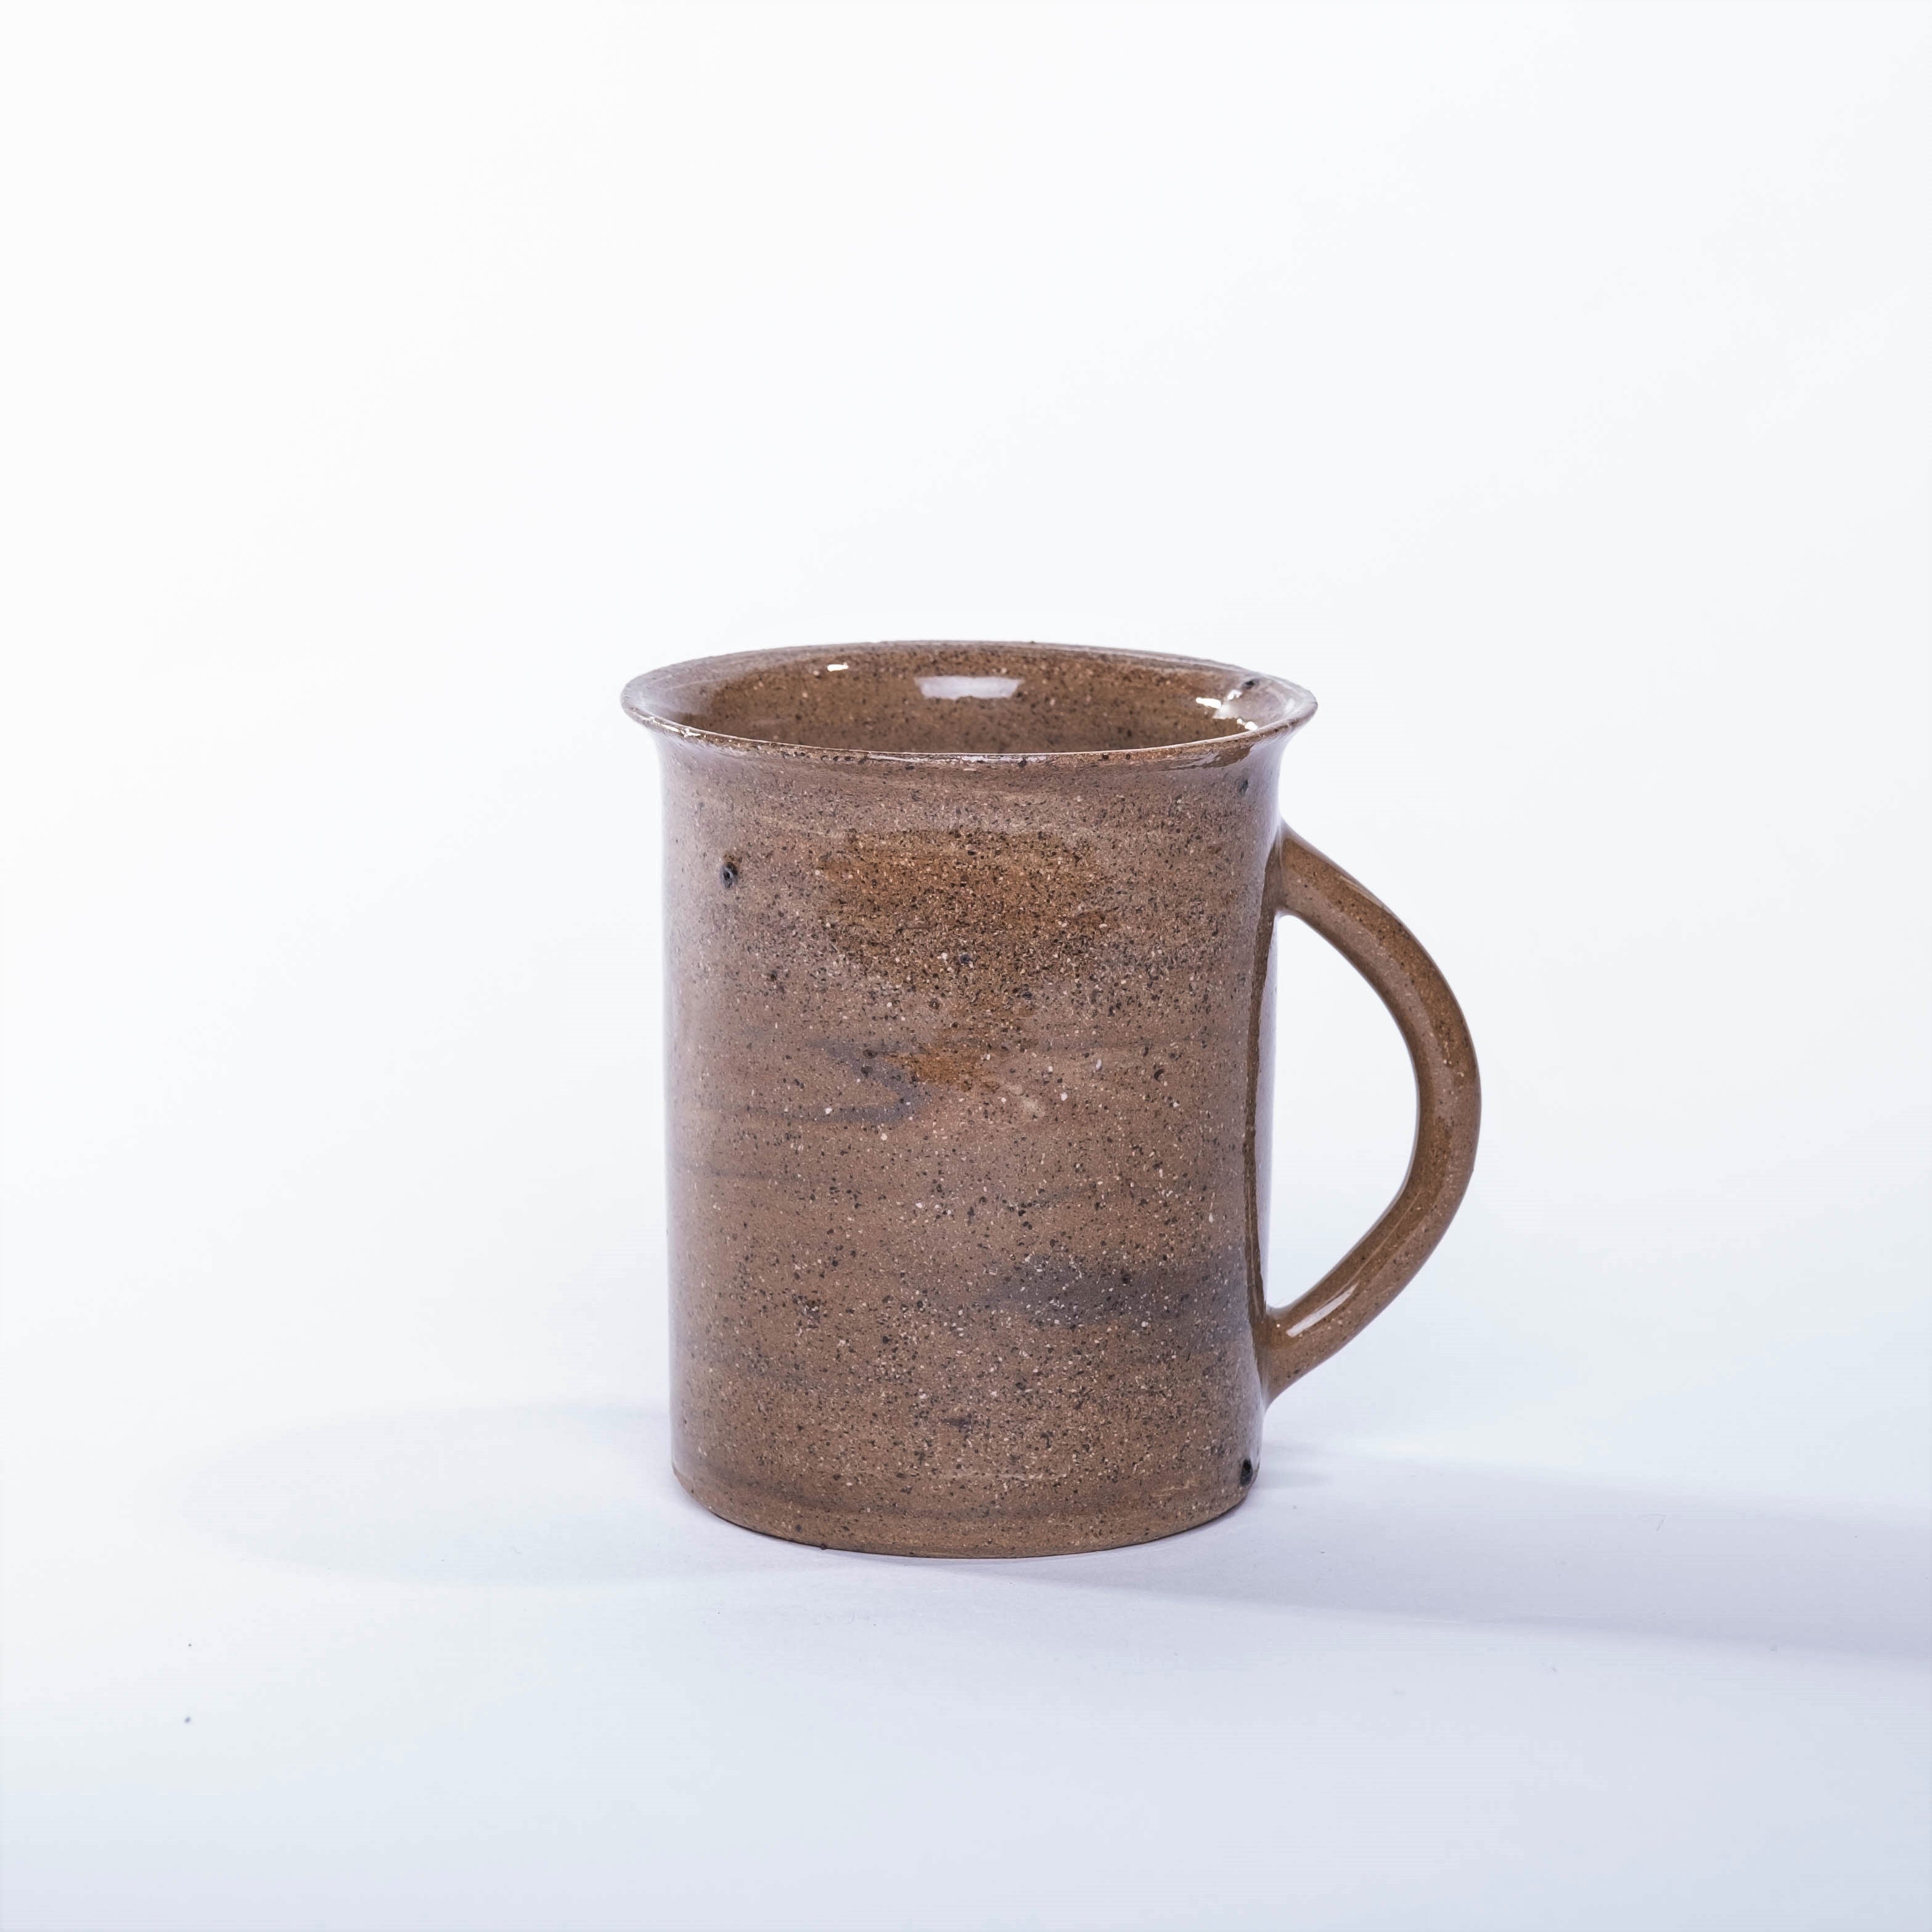 42 Sandstorm Mug by Sick Ceramics